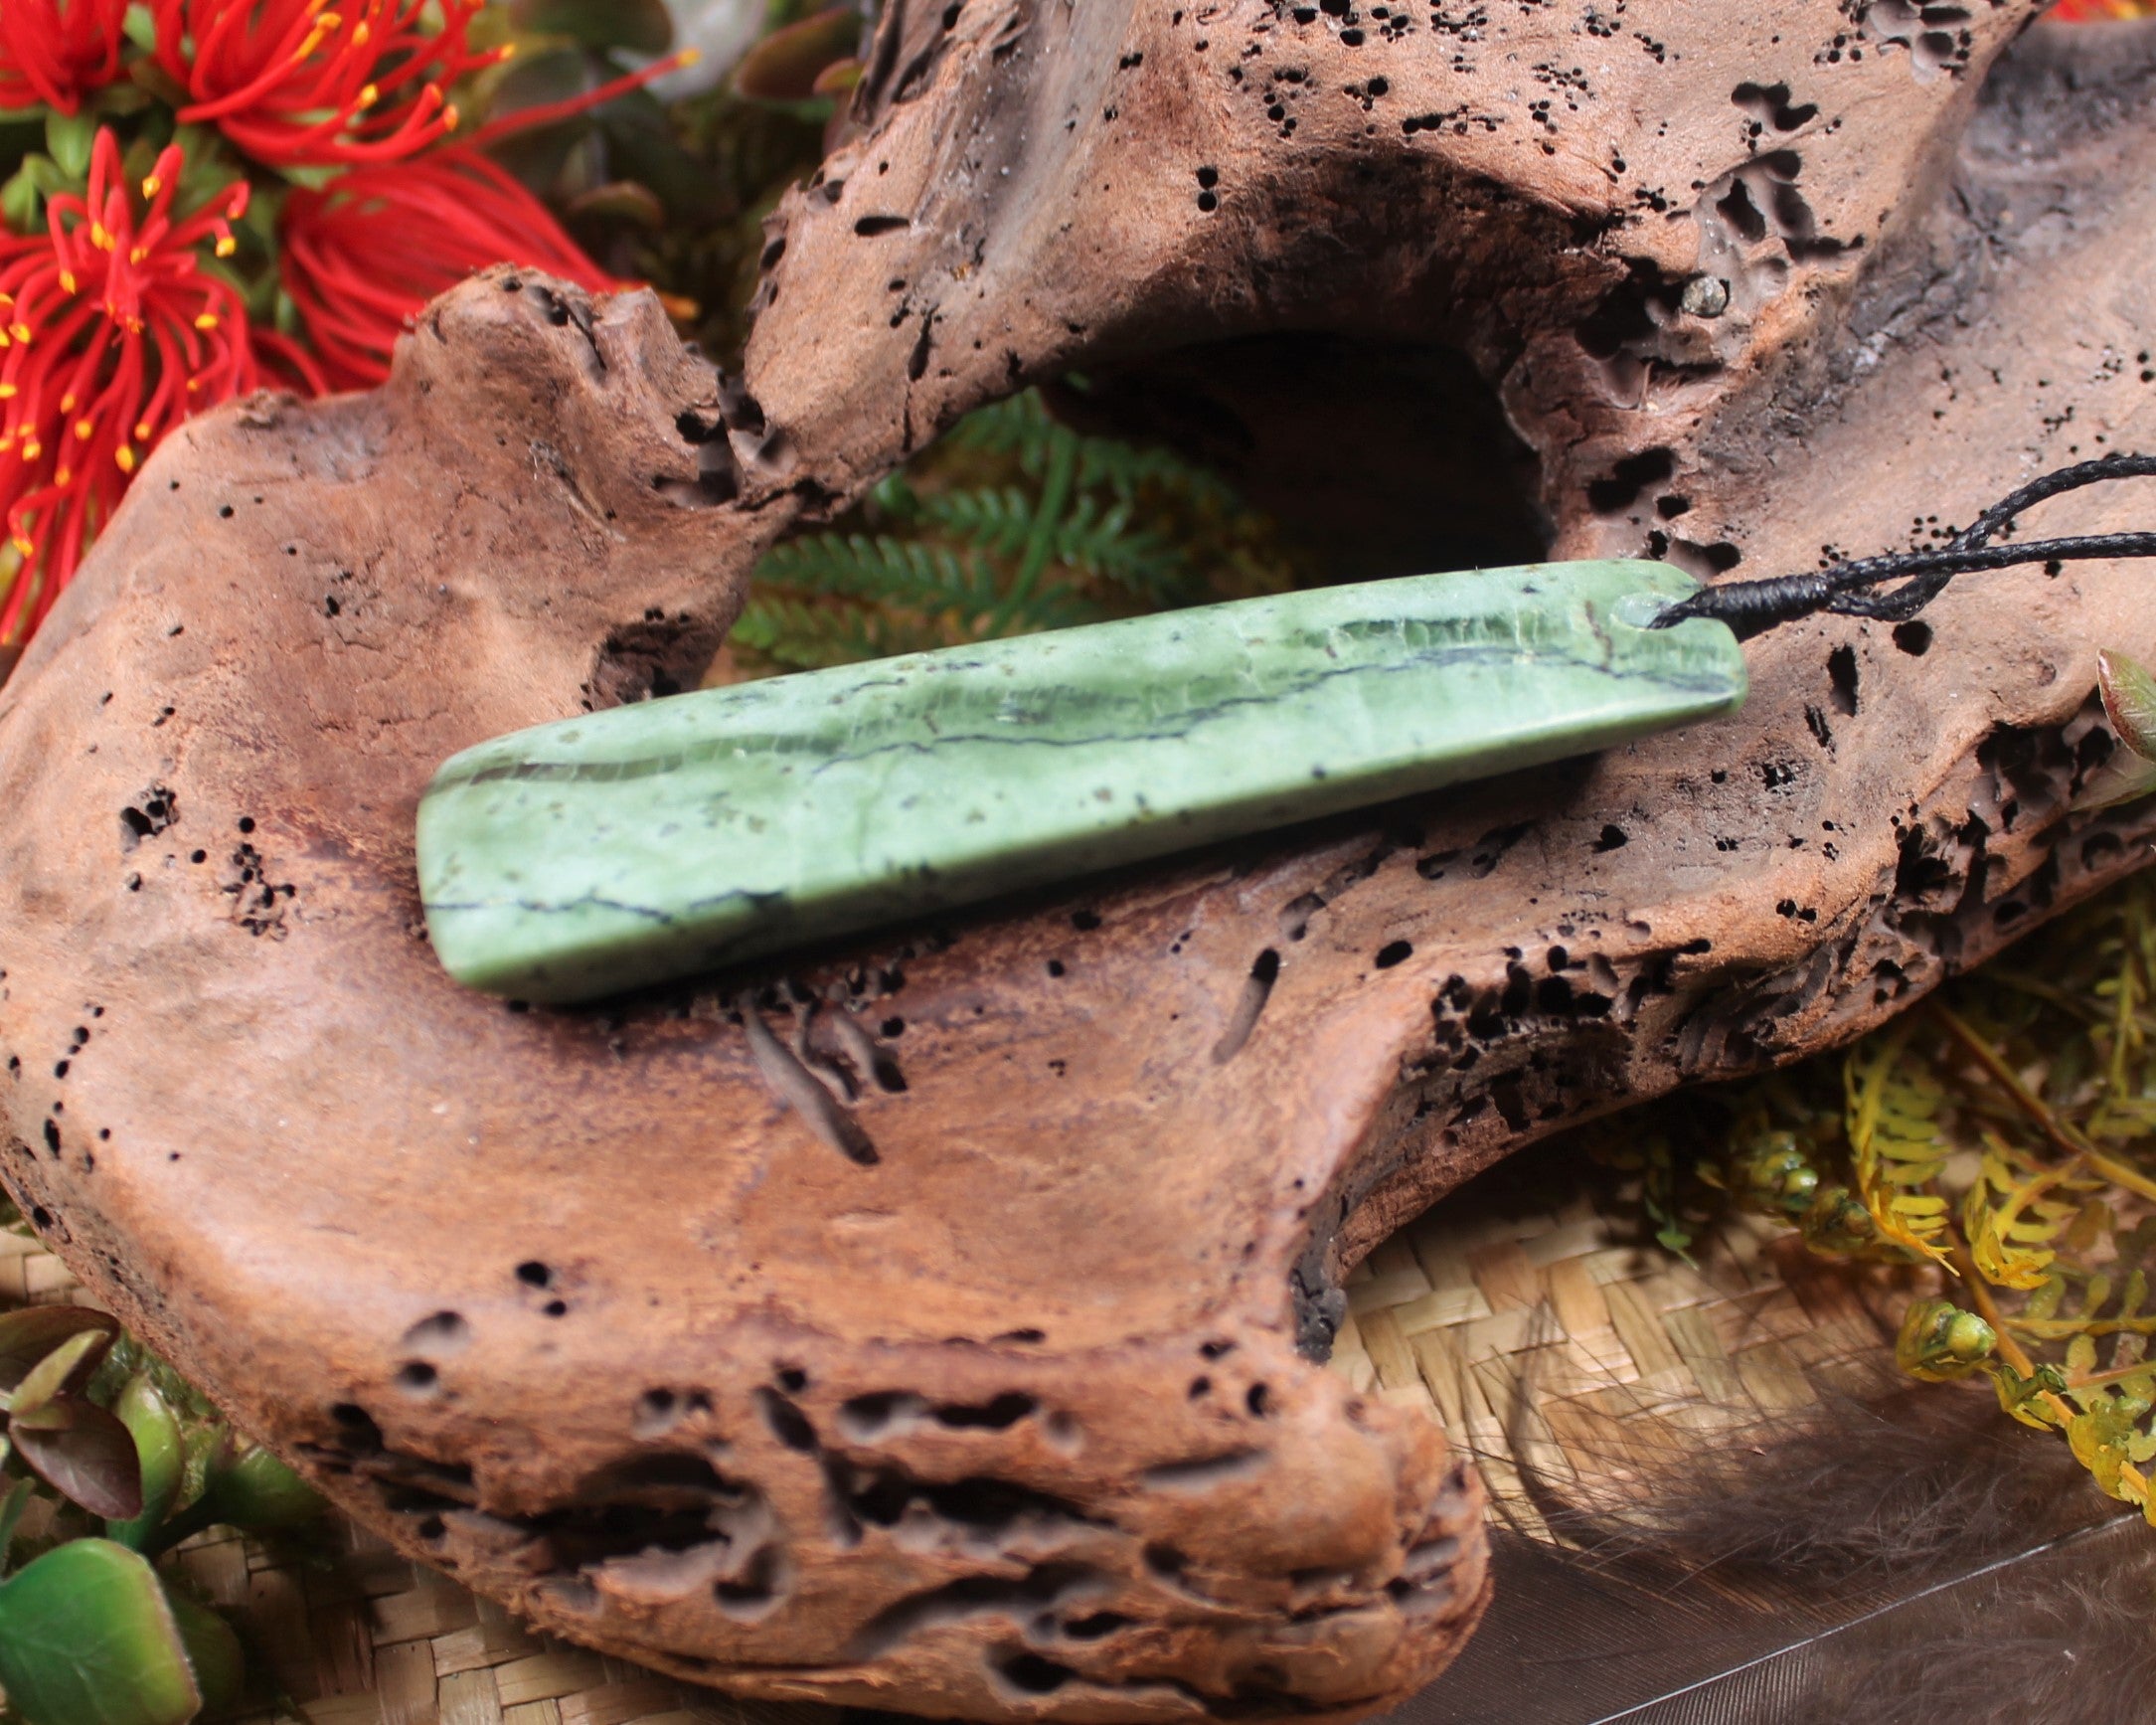 Toki or Adze Pendant carved from Kawakawa Pounamu - NZ Greenstone